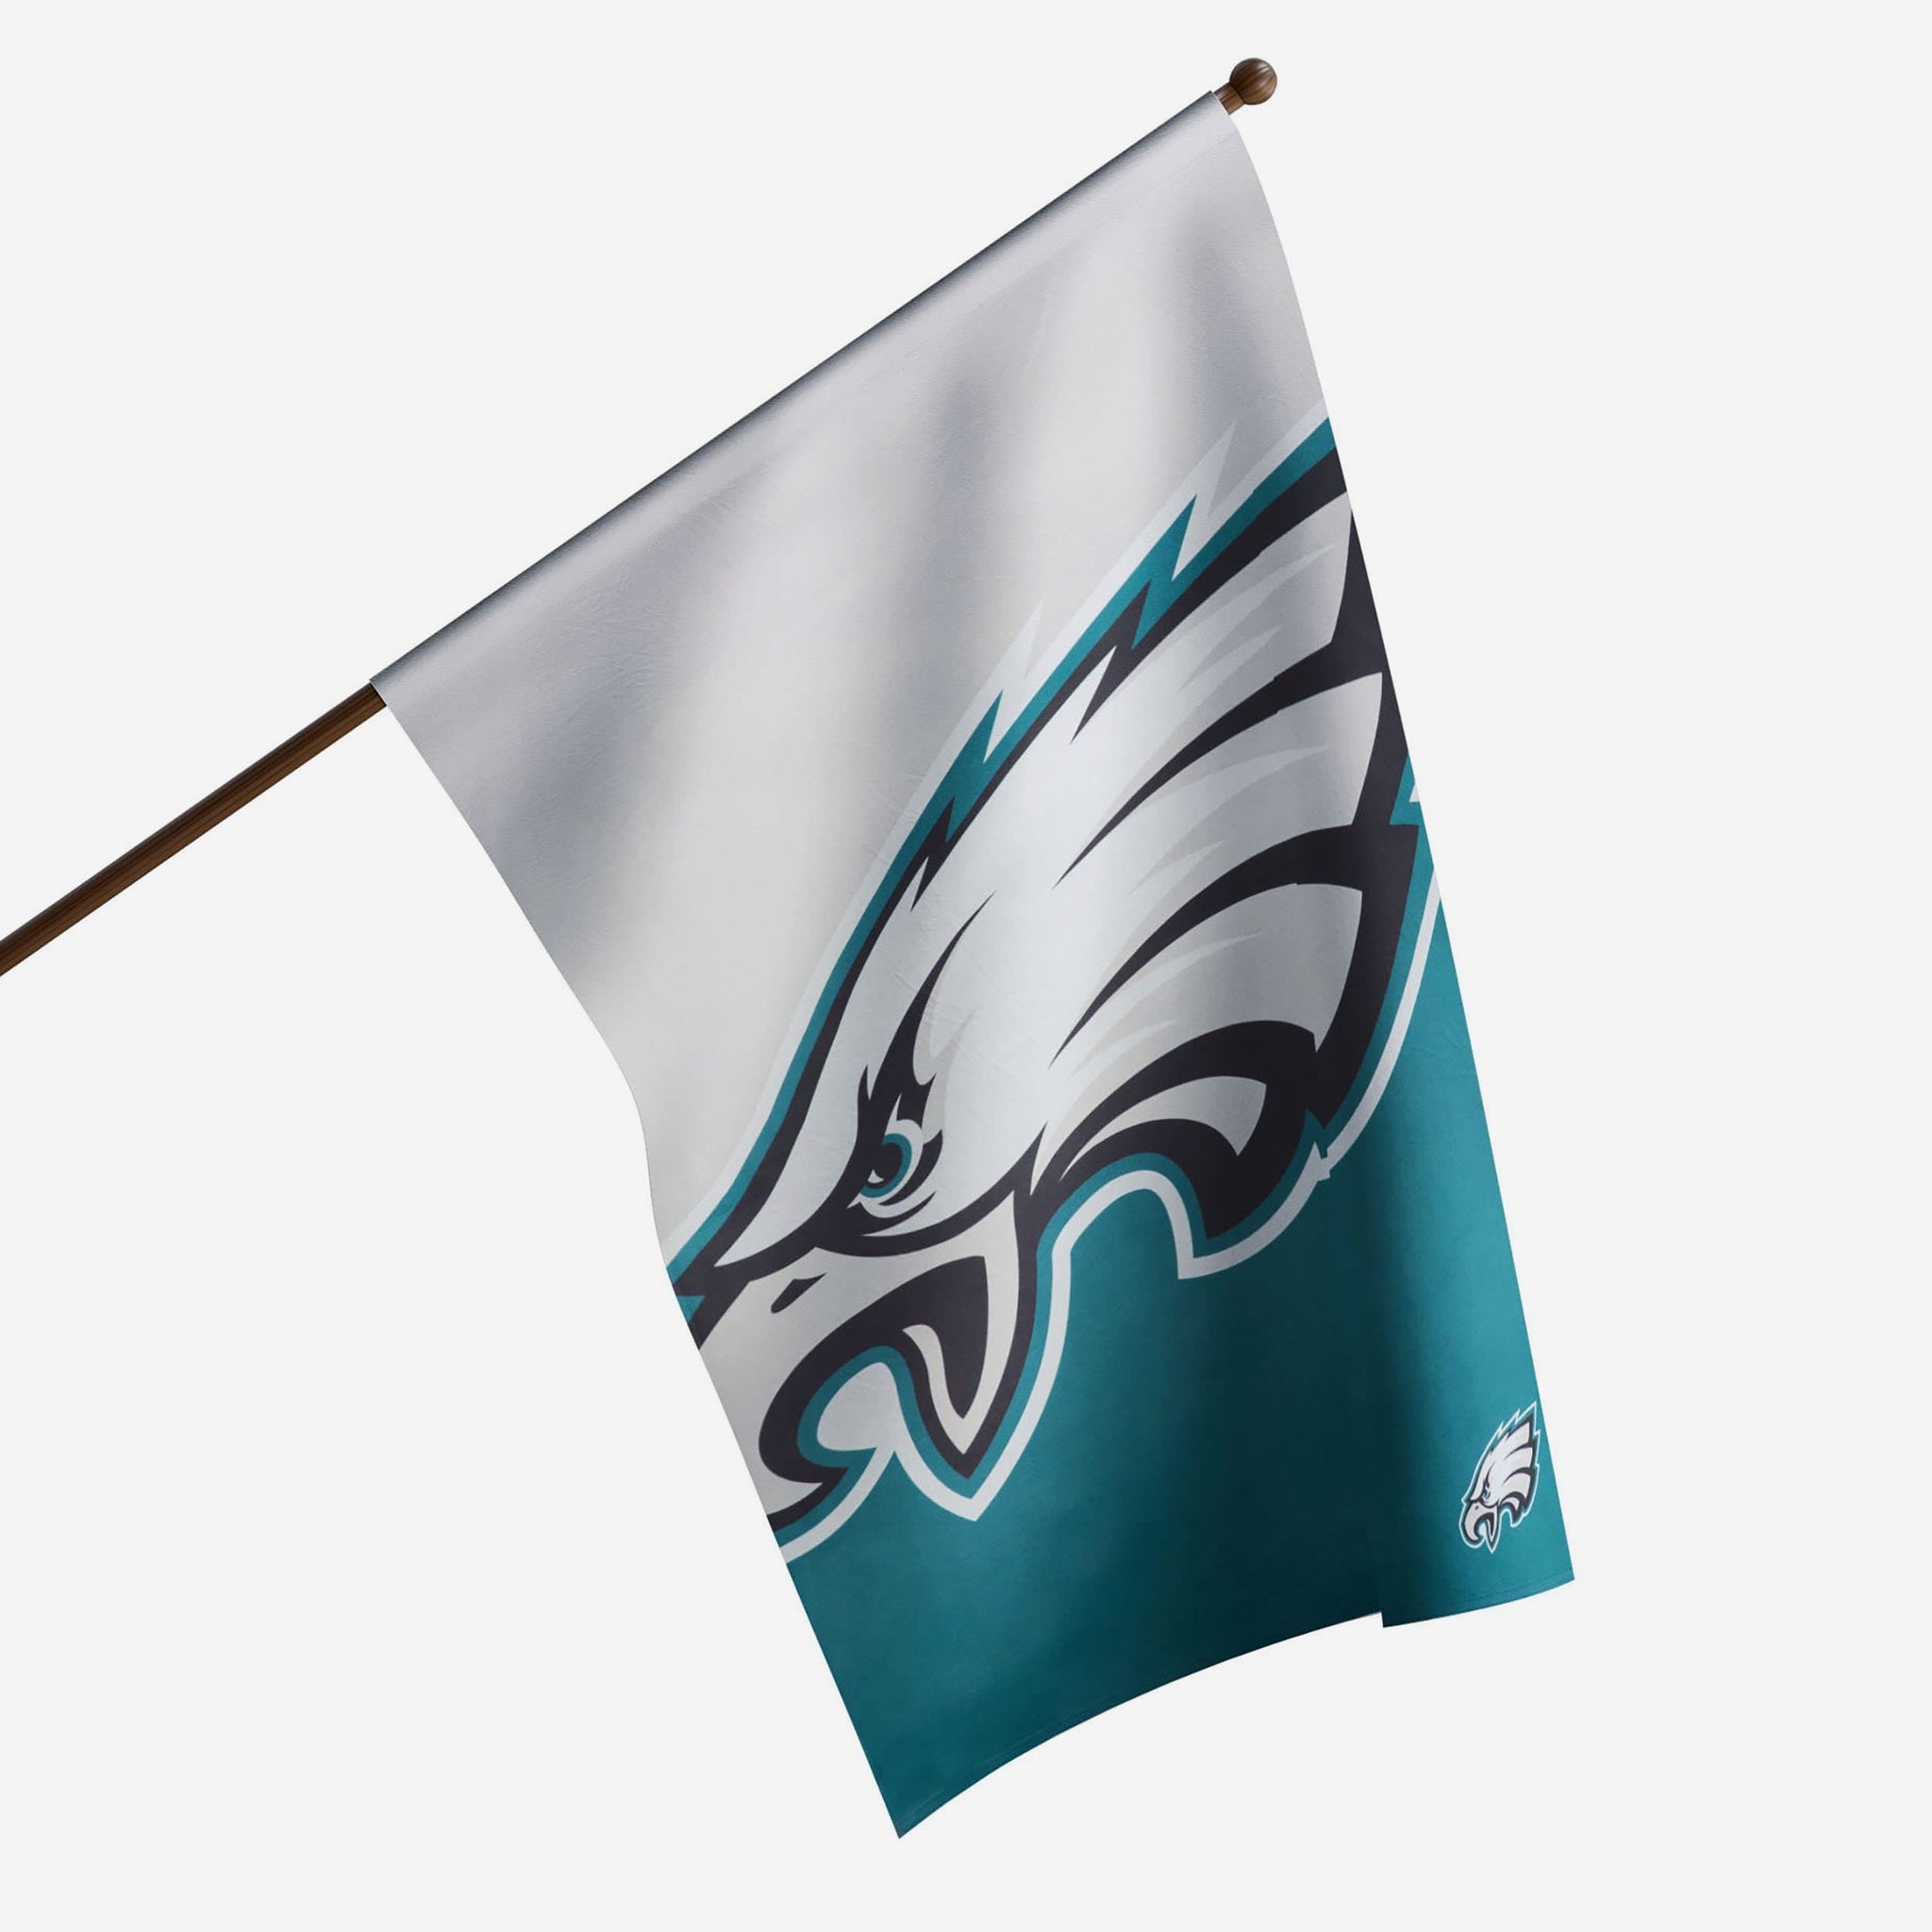 philadelphia eagles flag with pole